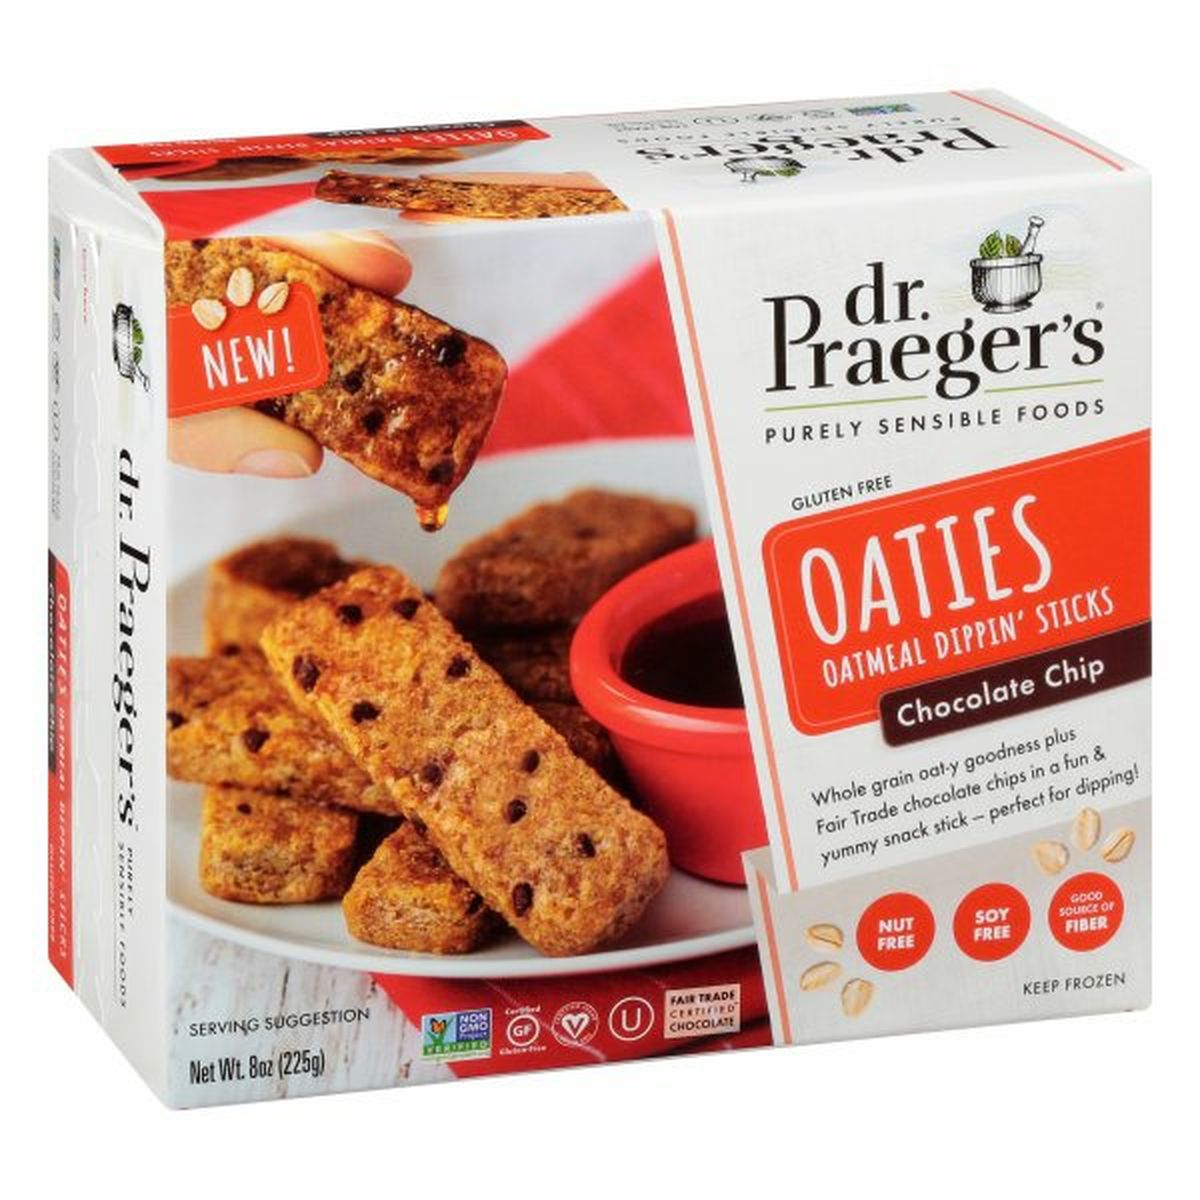 Calories in Dr. Praeger's Oaties, Gluten Free, Chocolate Chip